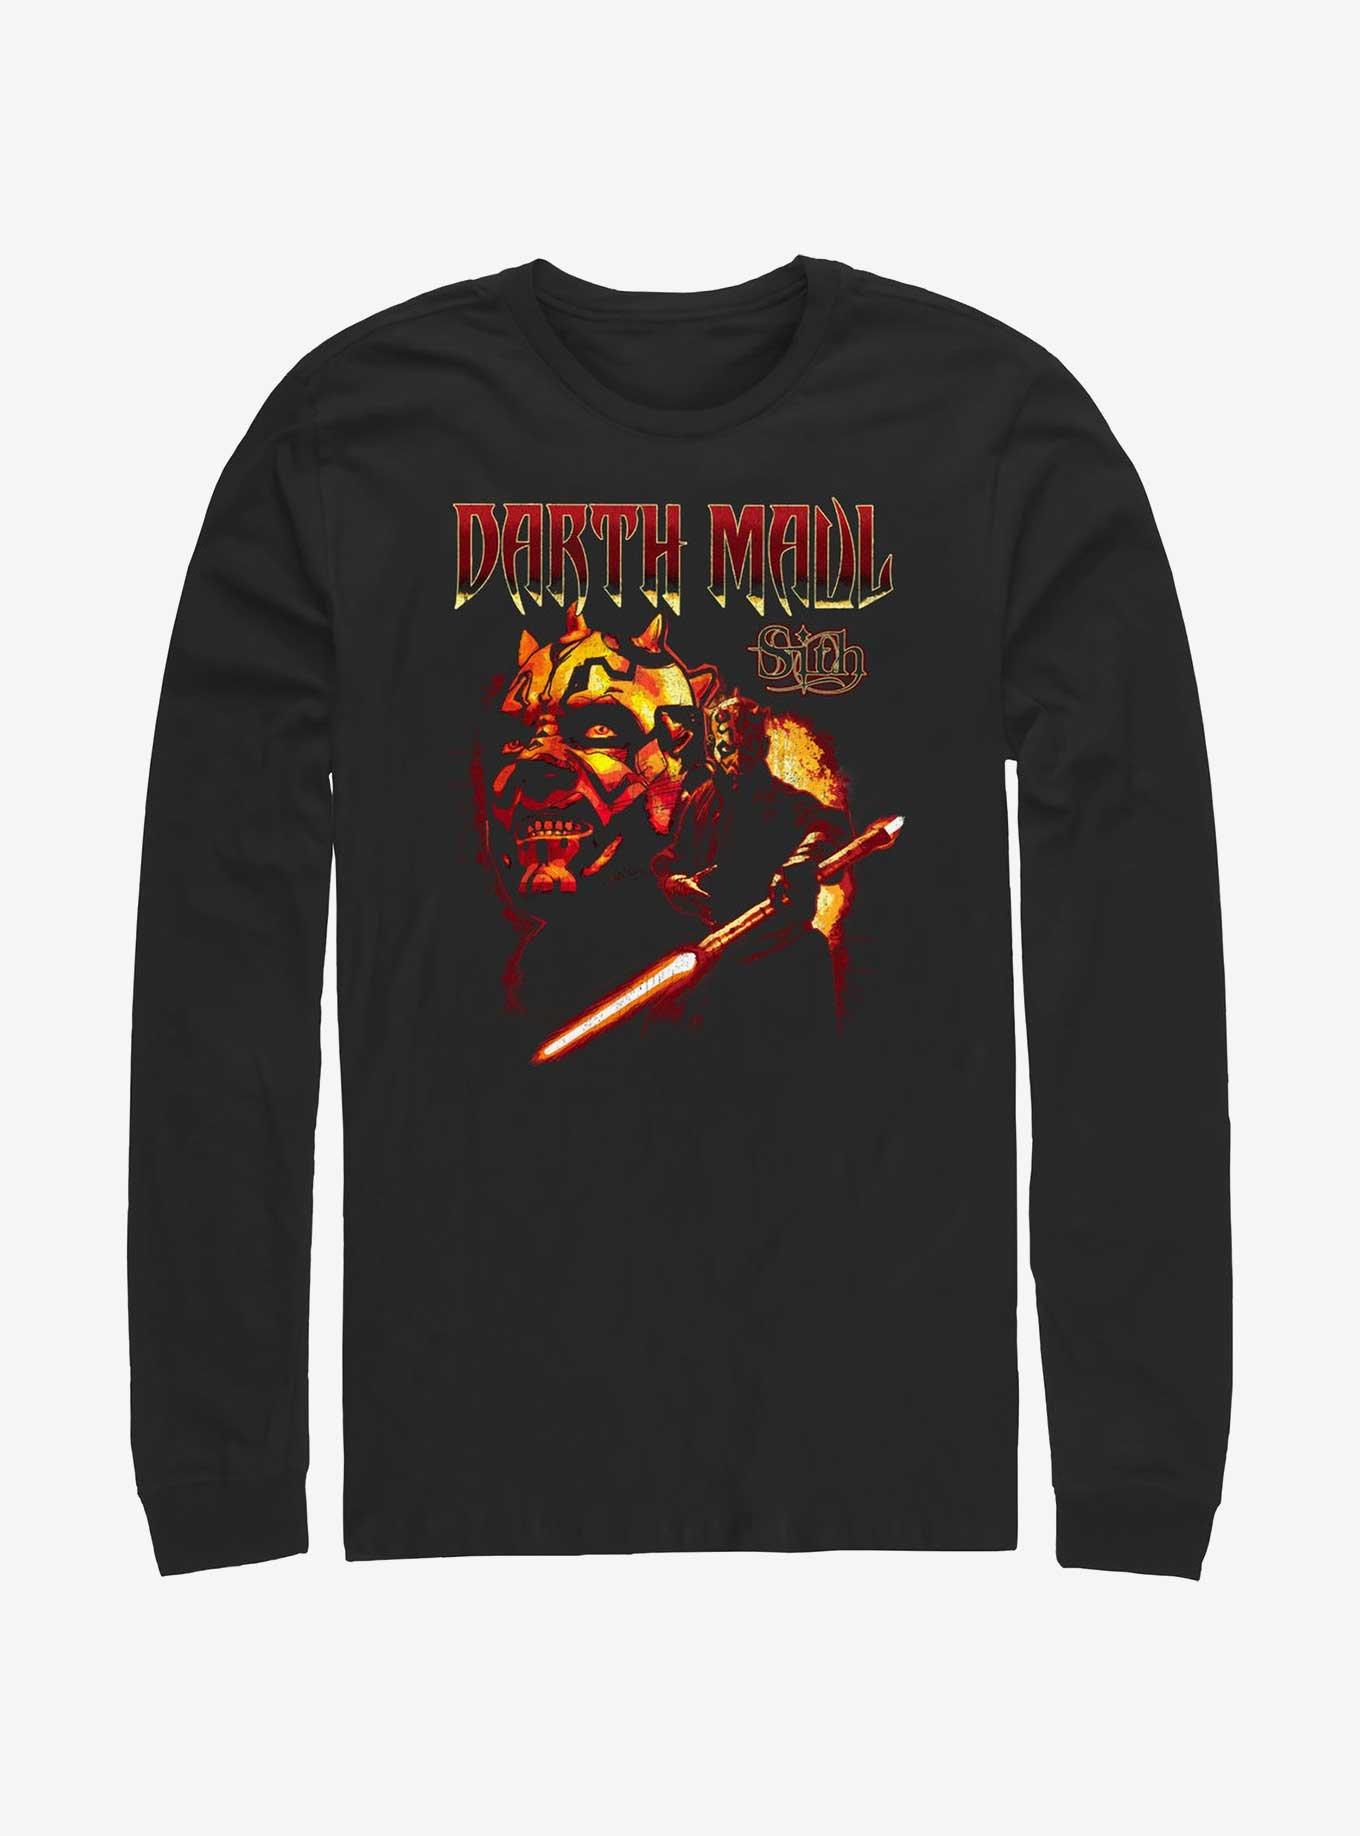 Star Wars Heavy Metal Darth Maul Long-Sleeve T-Shirt